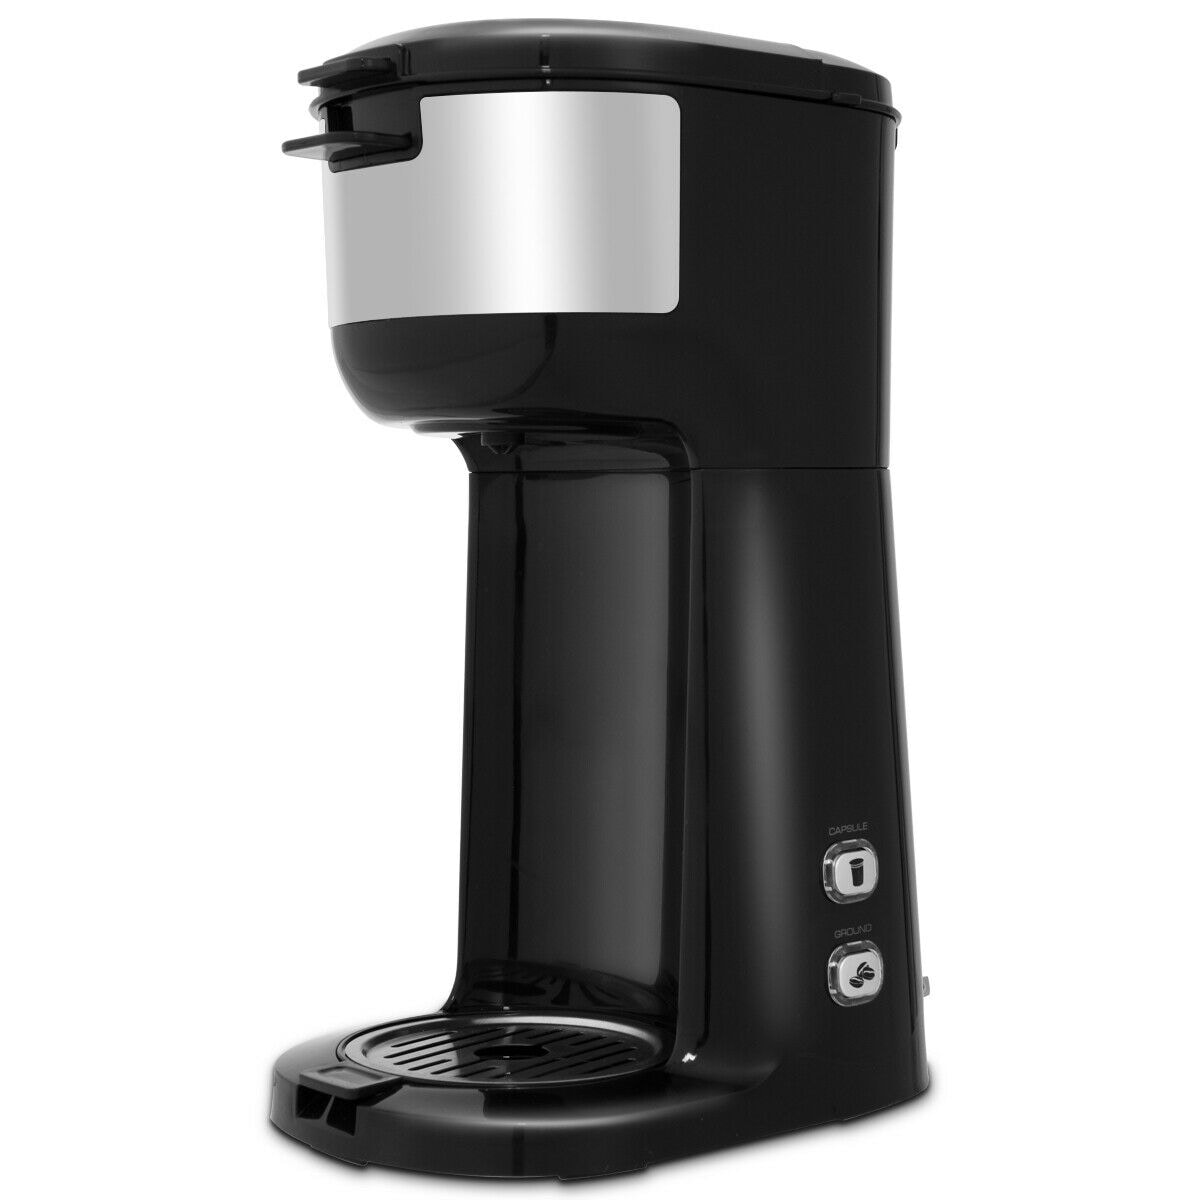 DRINKPOD JAVAPod K-Cup Black Coffee Maker Single Serve Brewer, 10